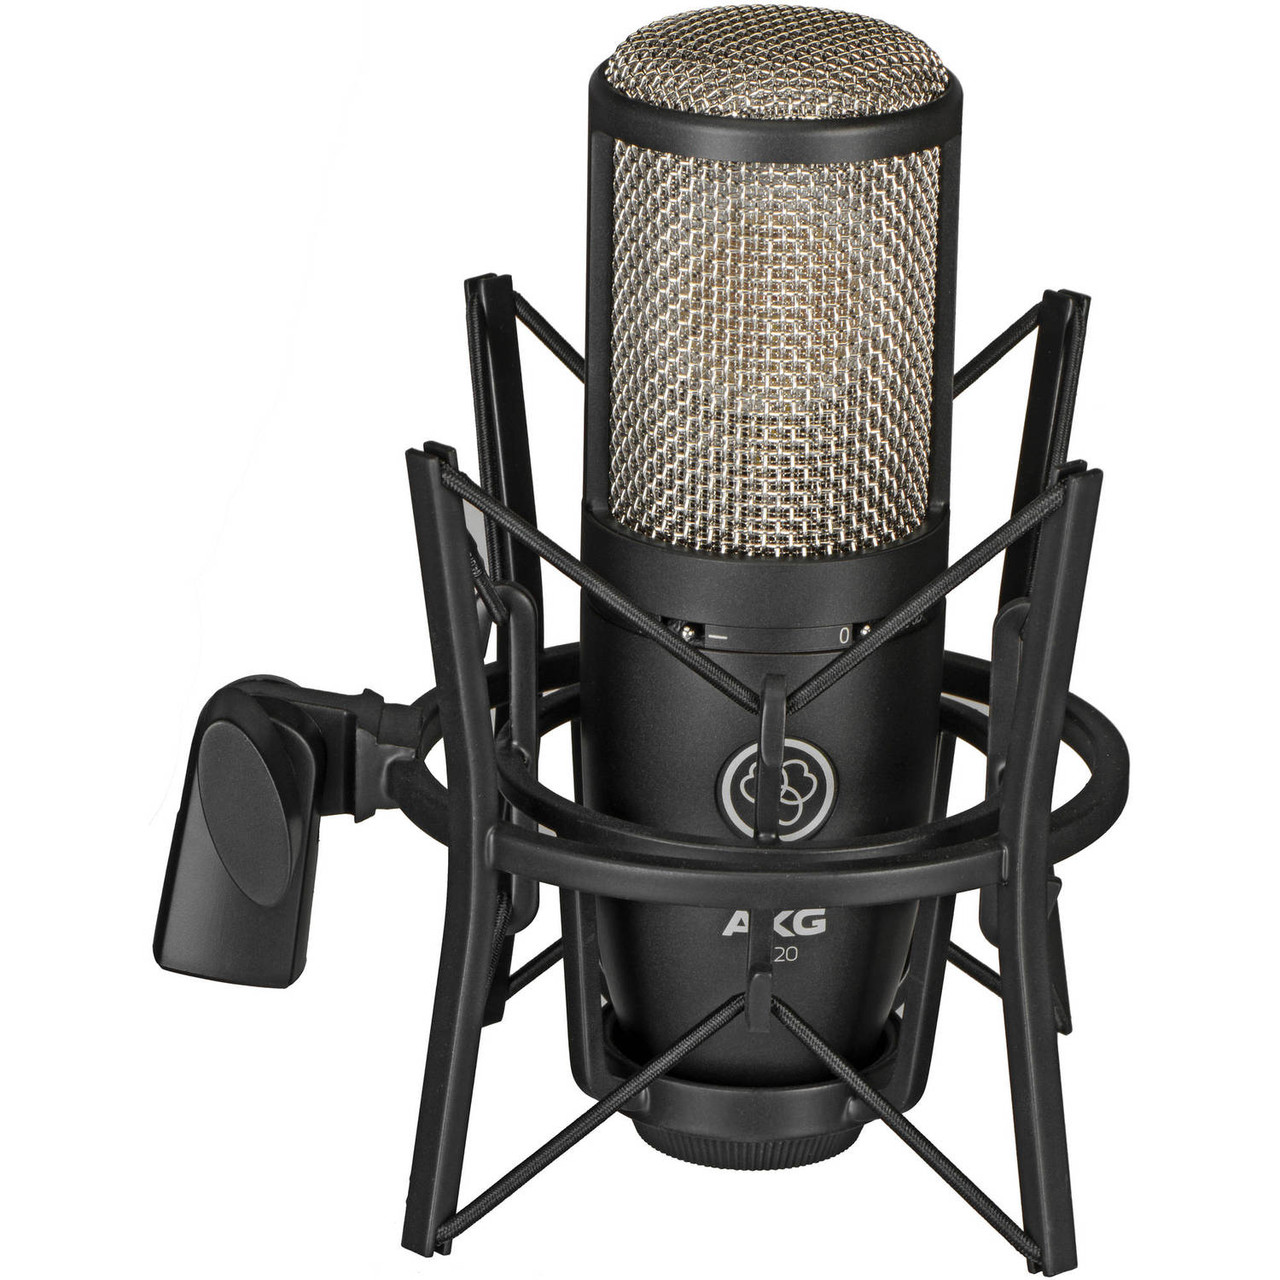 AKG P220 Microphone | FrontEndAudio.com